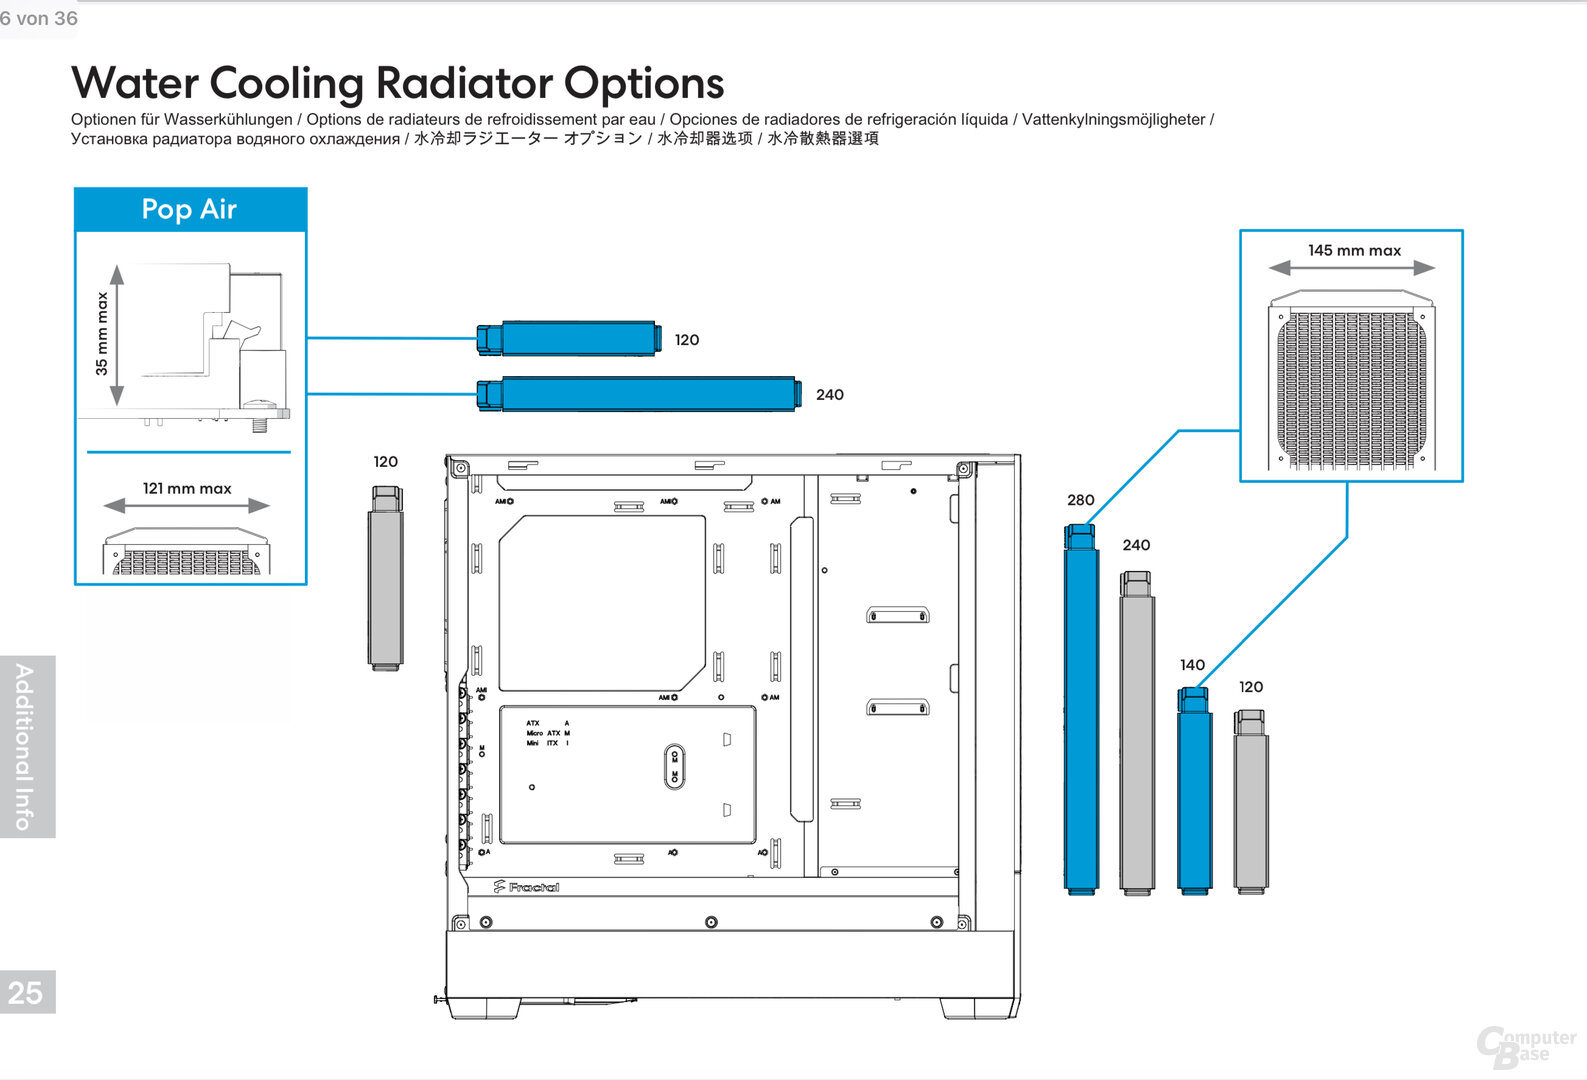 Fractal Design Pop in the test: Radiator options